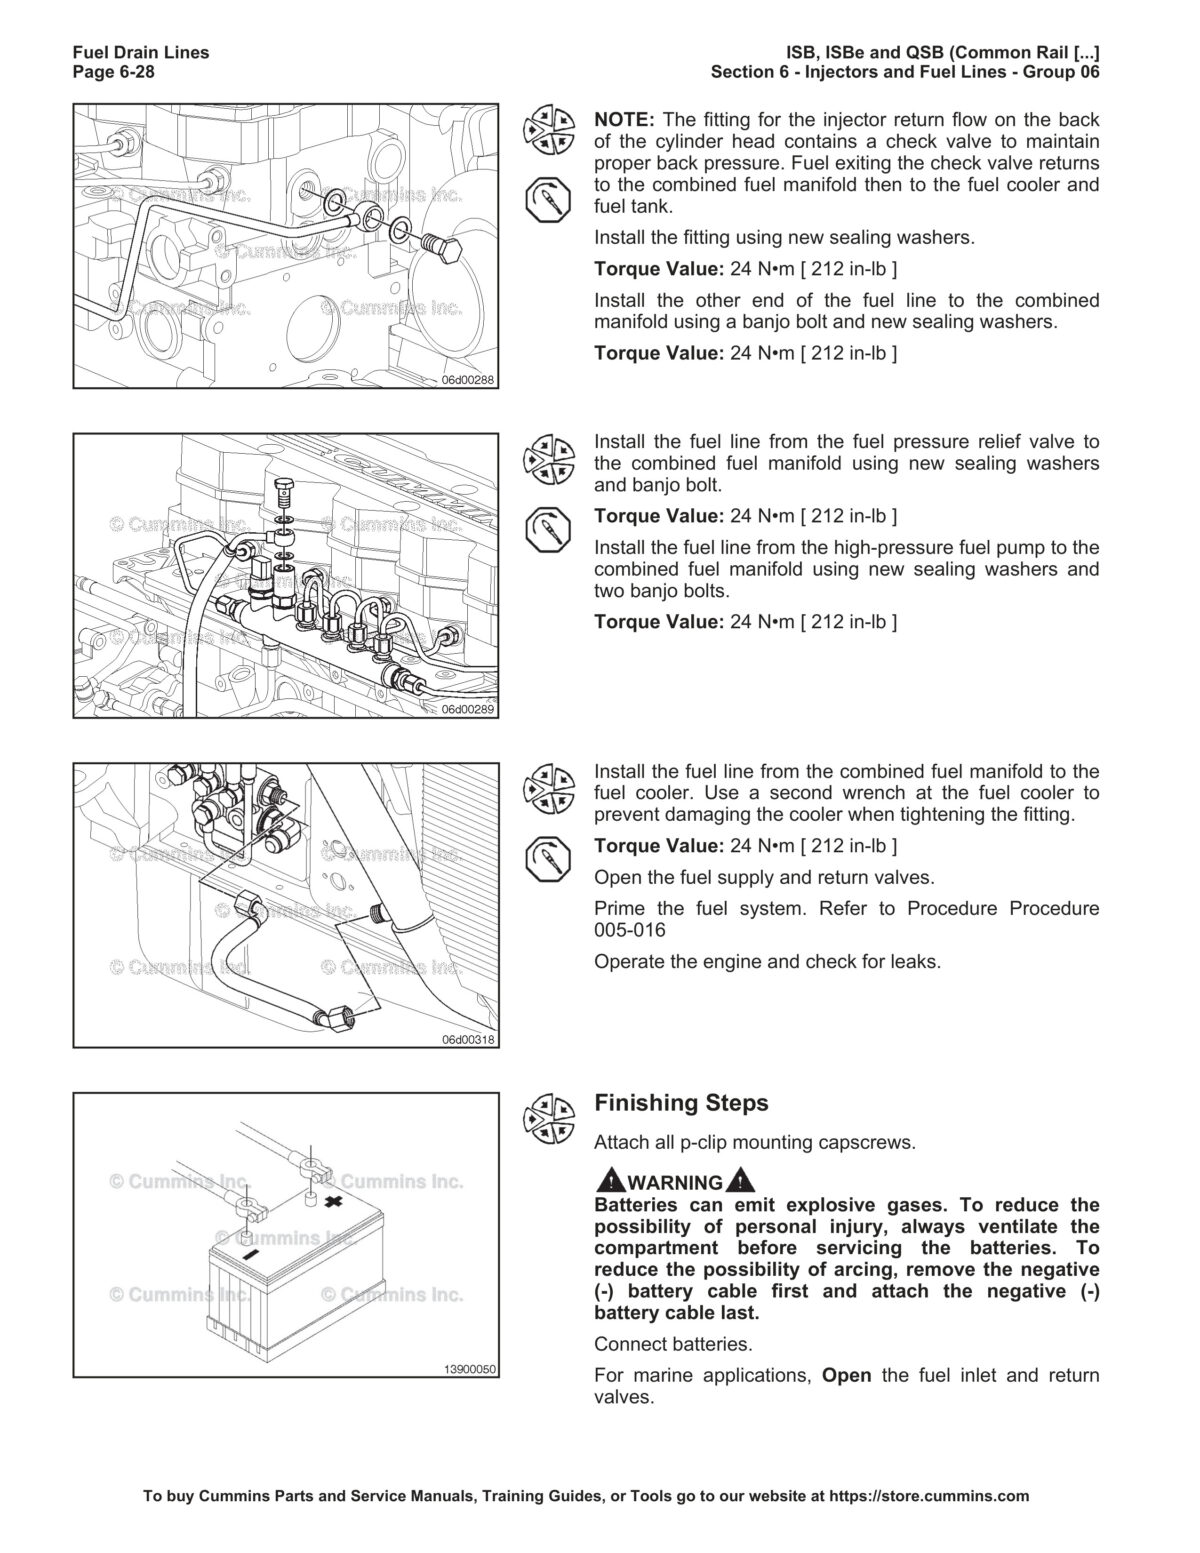 Cummins Engine (ISBe ISB QSB) Common Rail Fuel System Service Manual Volume II